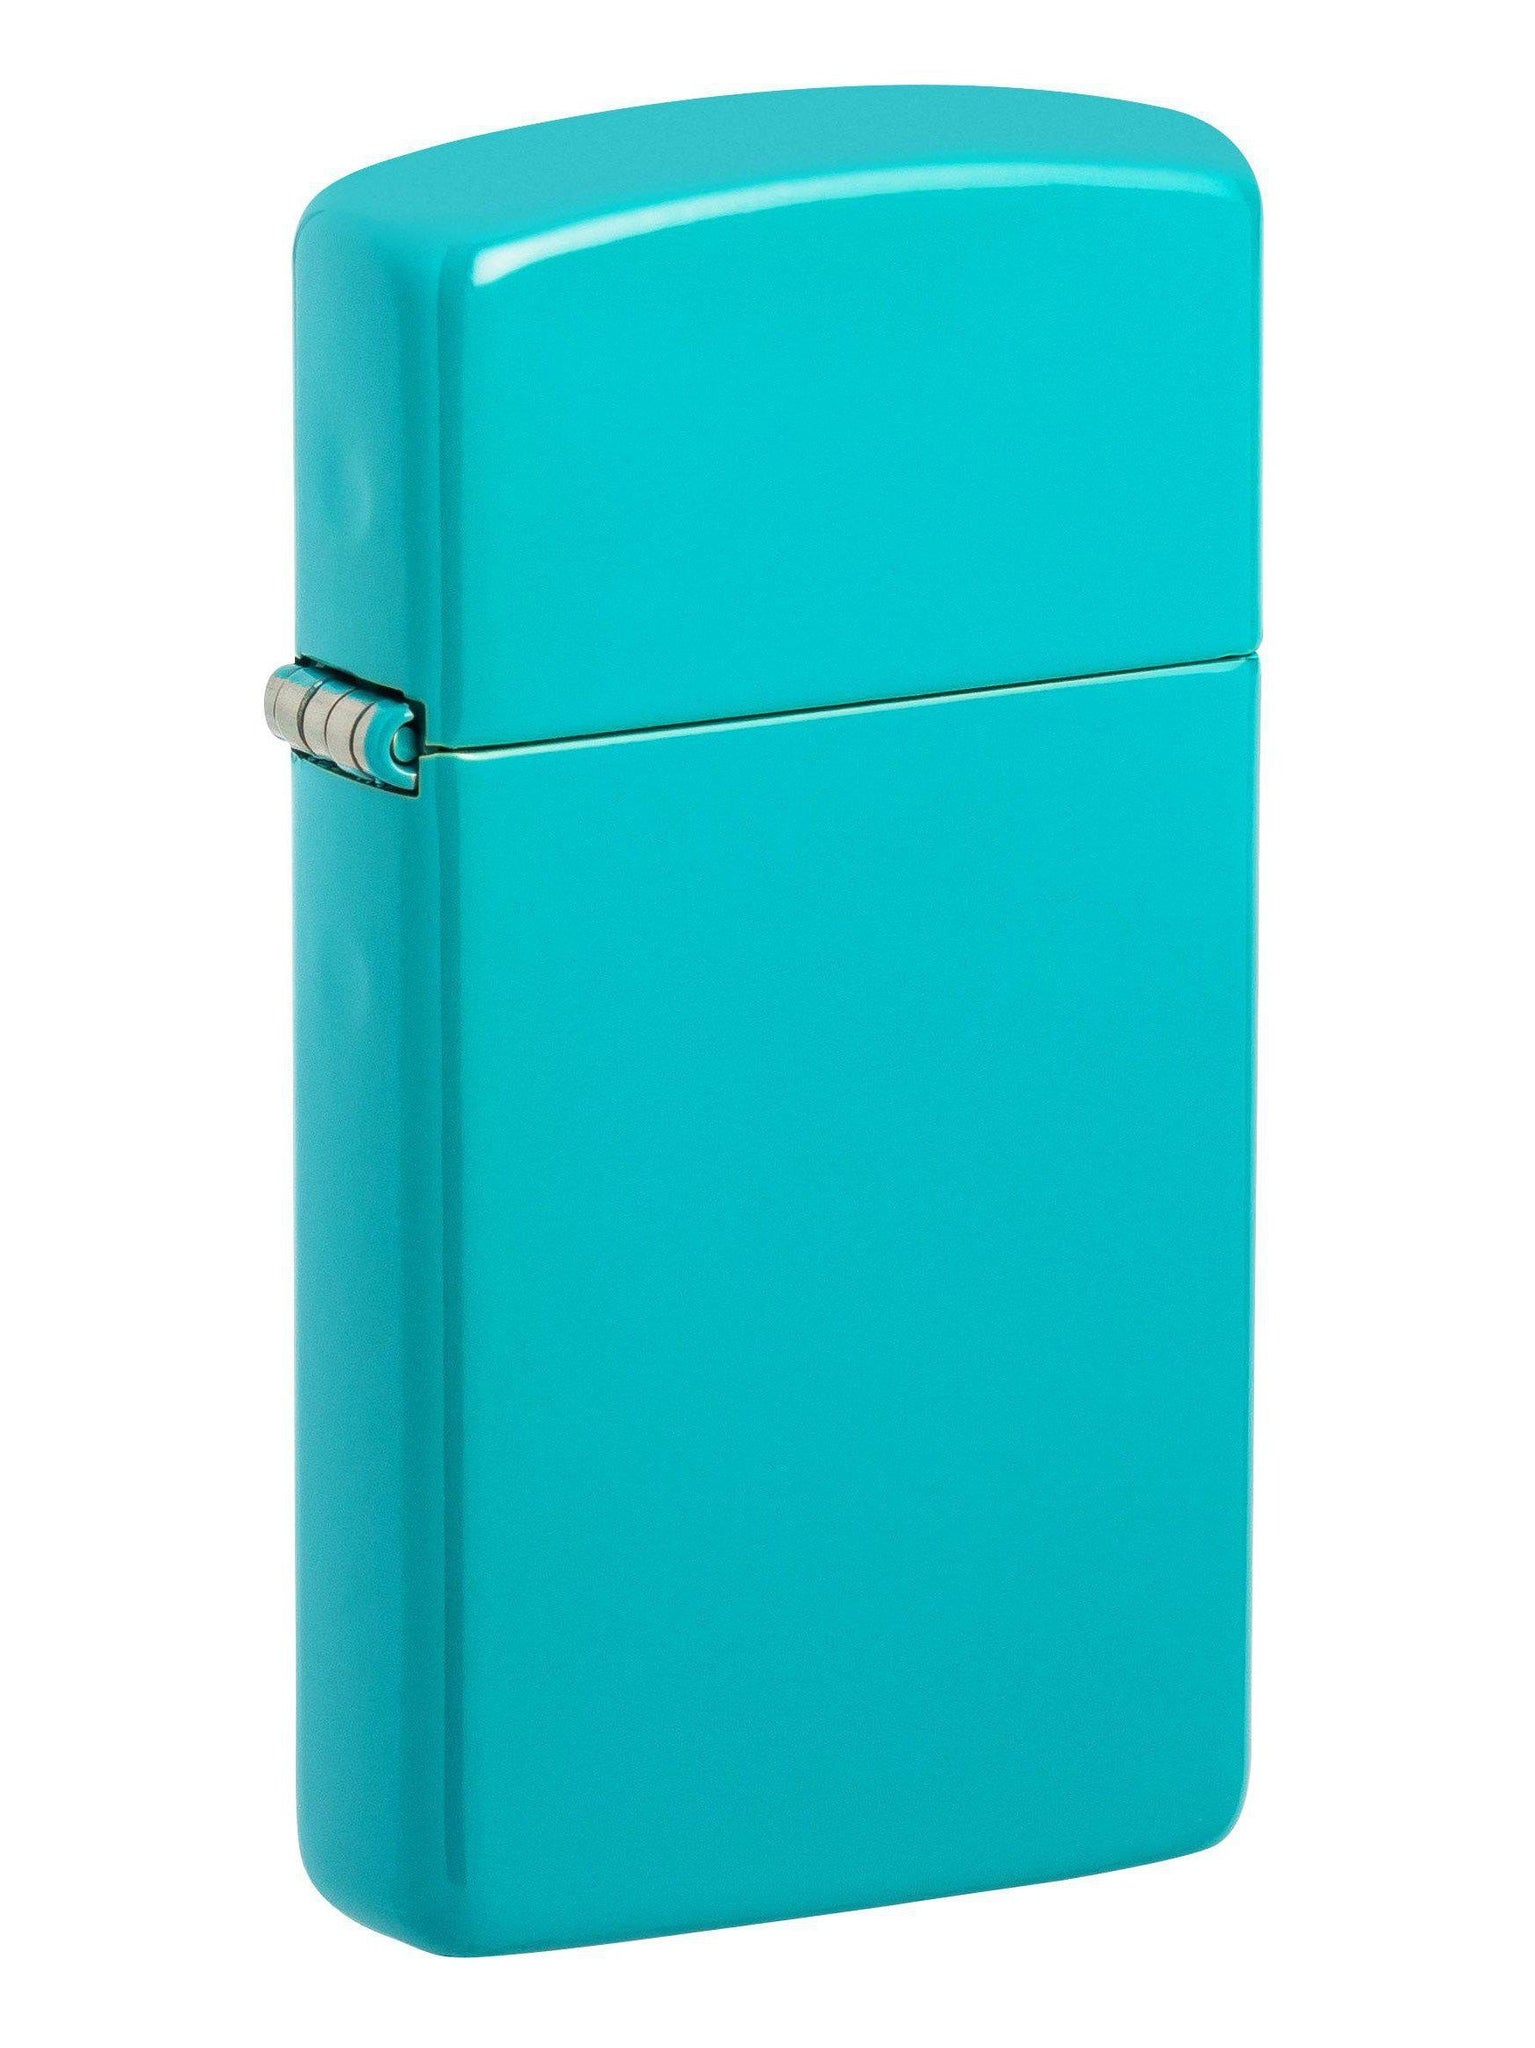 Zippo Lighter: Slim - Flat Turquoise 49529